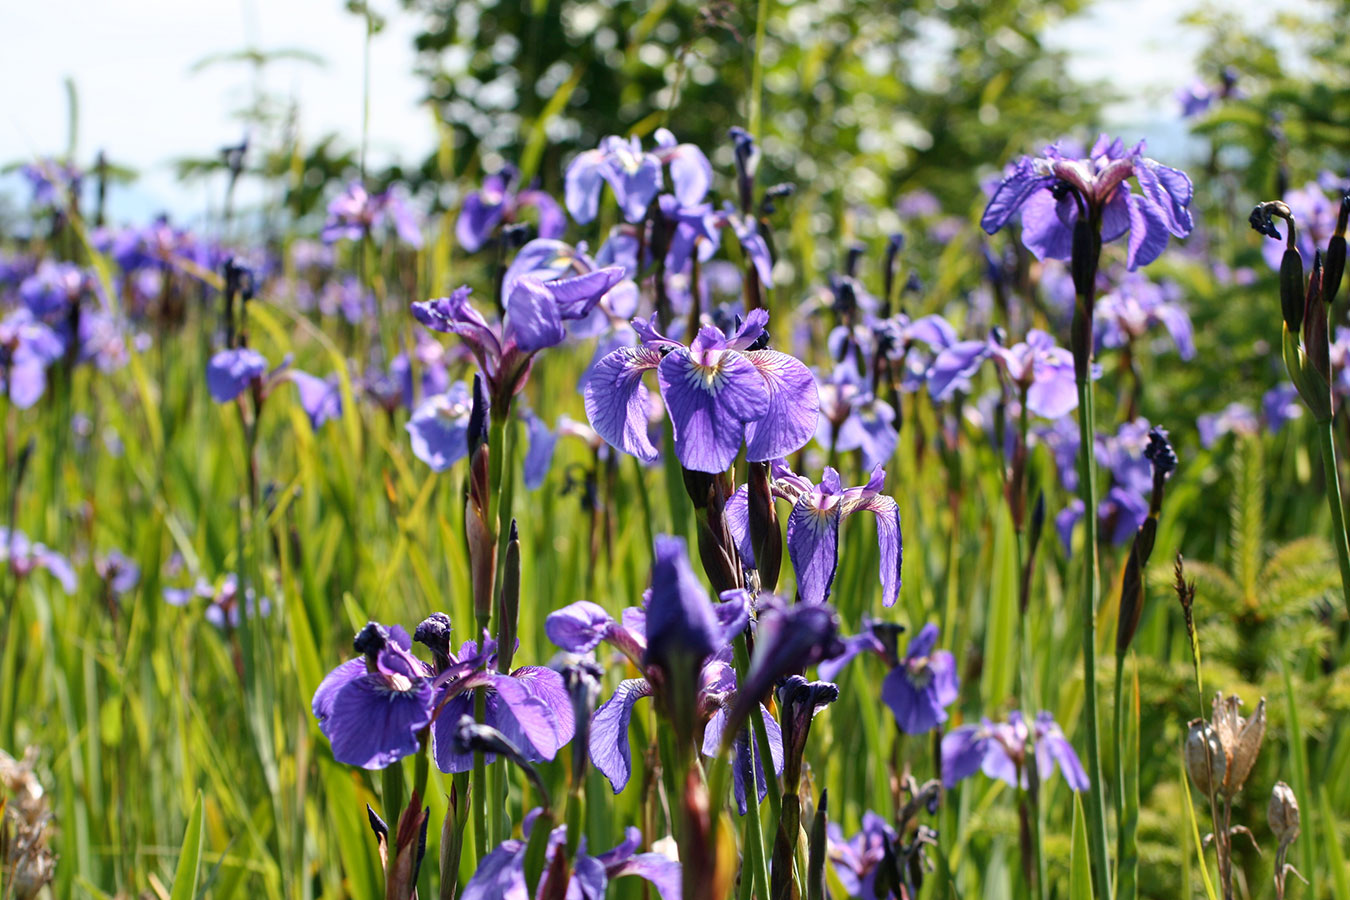 Wild Irises near Seward